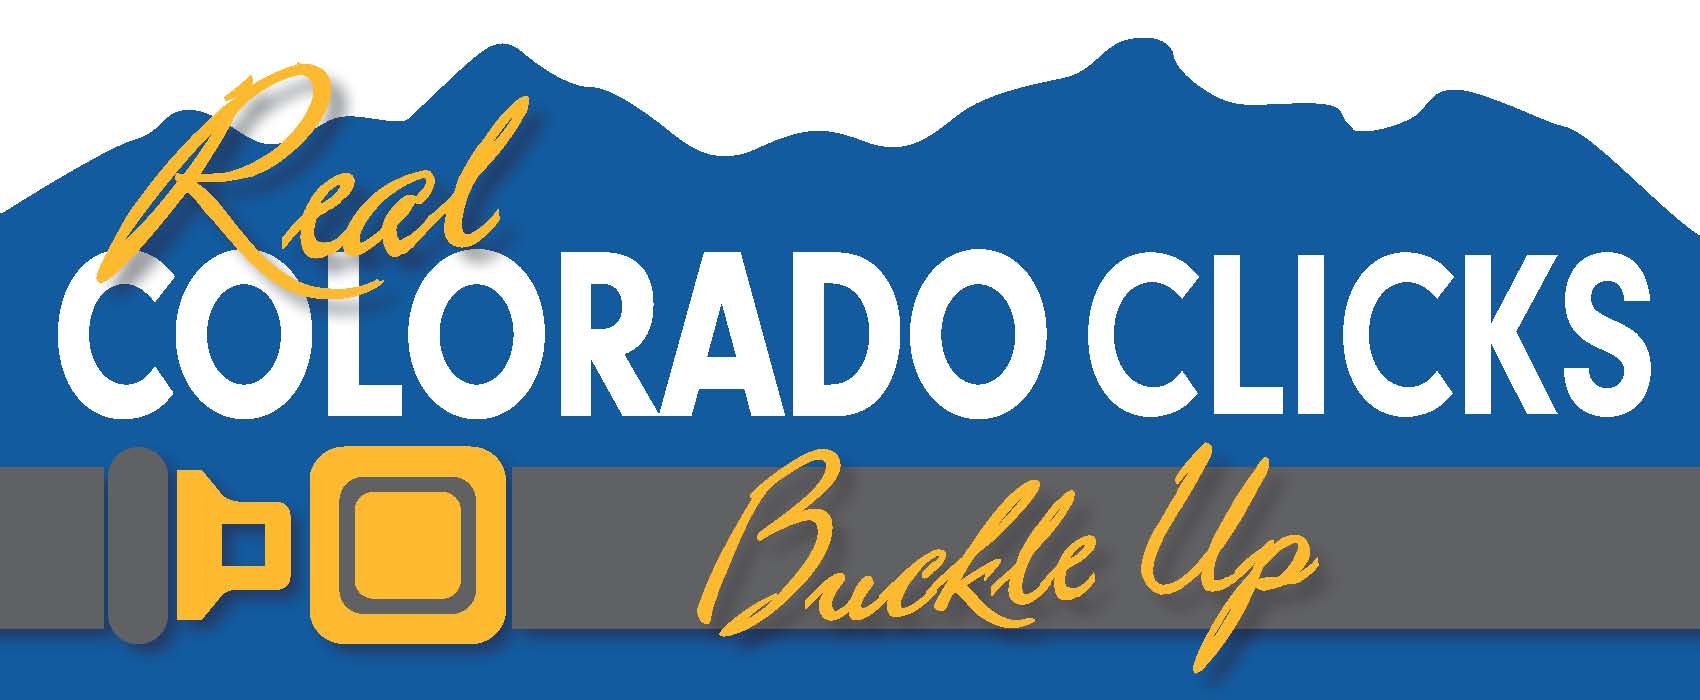 2014 Real Colorado Logo detail image